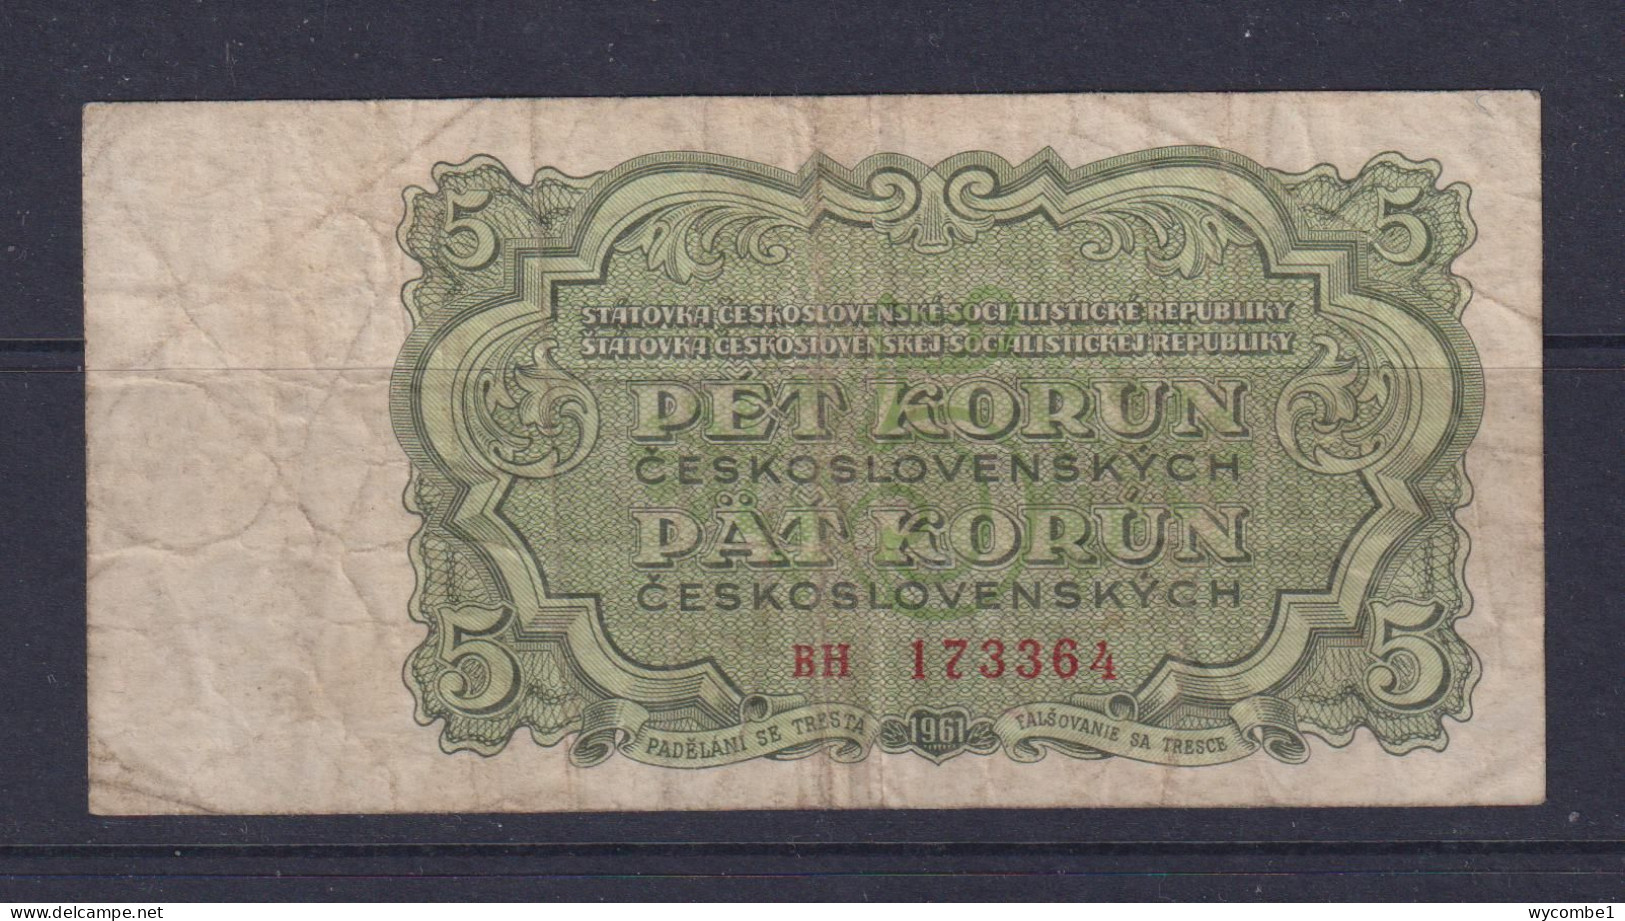 CZECHOSLOVAKIA - 1961 5 Korun Circulated Banknote - Czechoslovakia